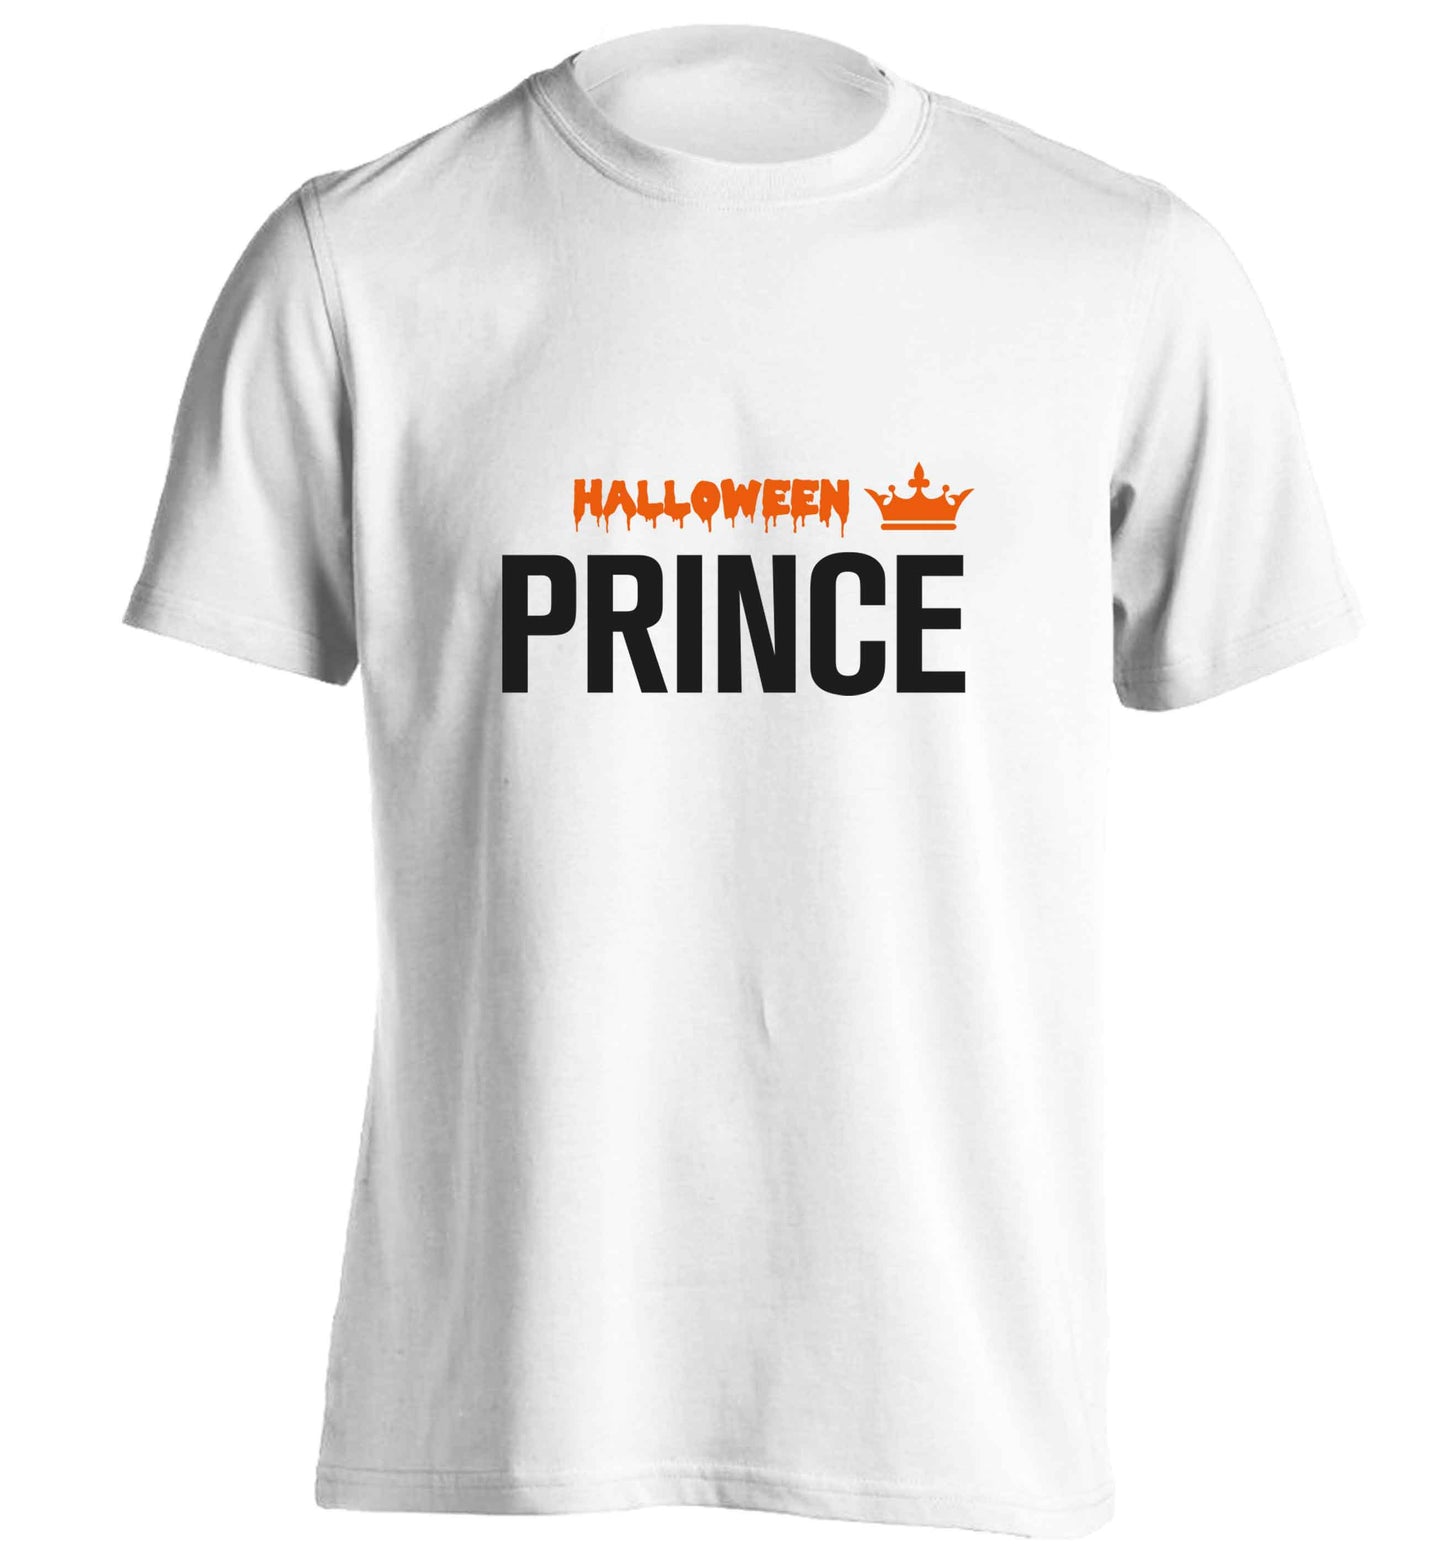 Halloween prince adults unisex white Tshirt 2XL